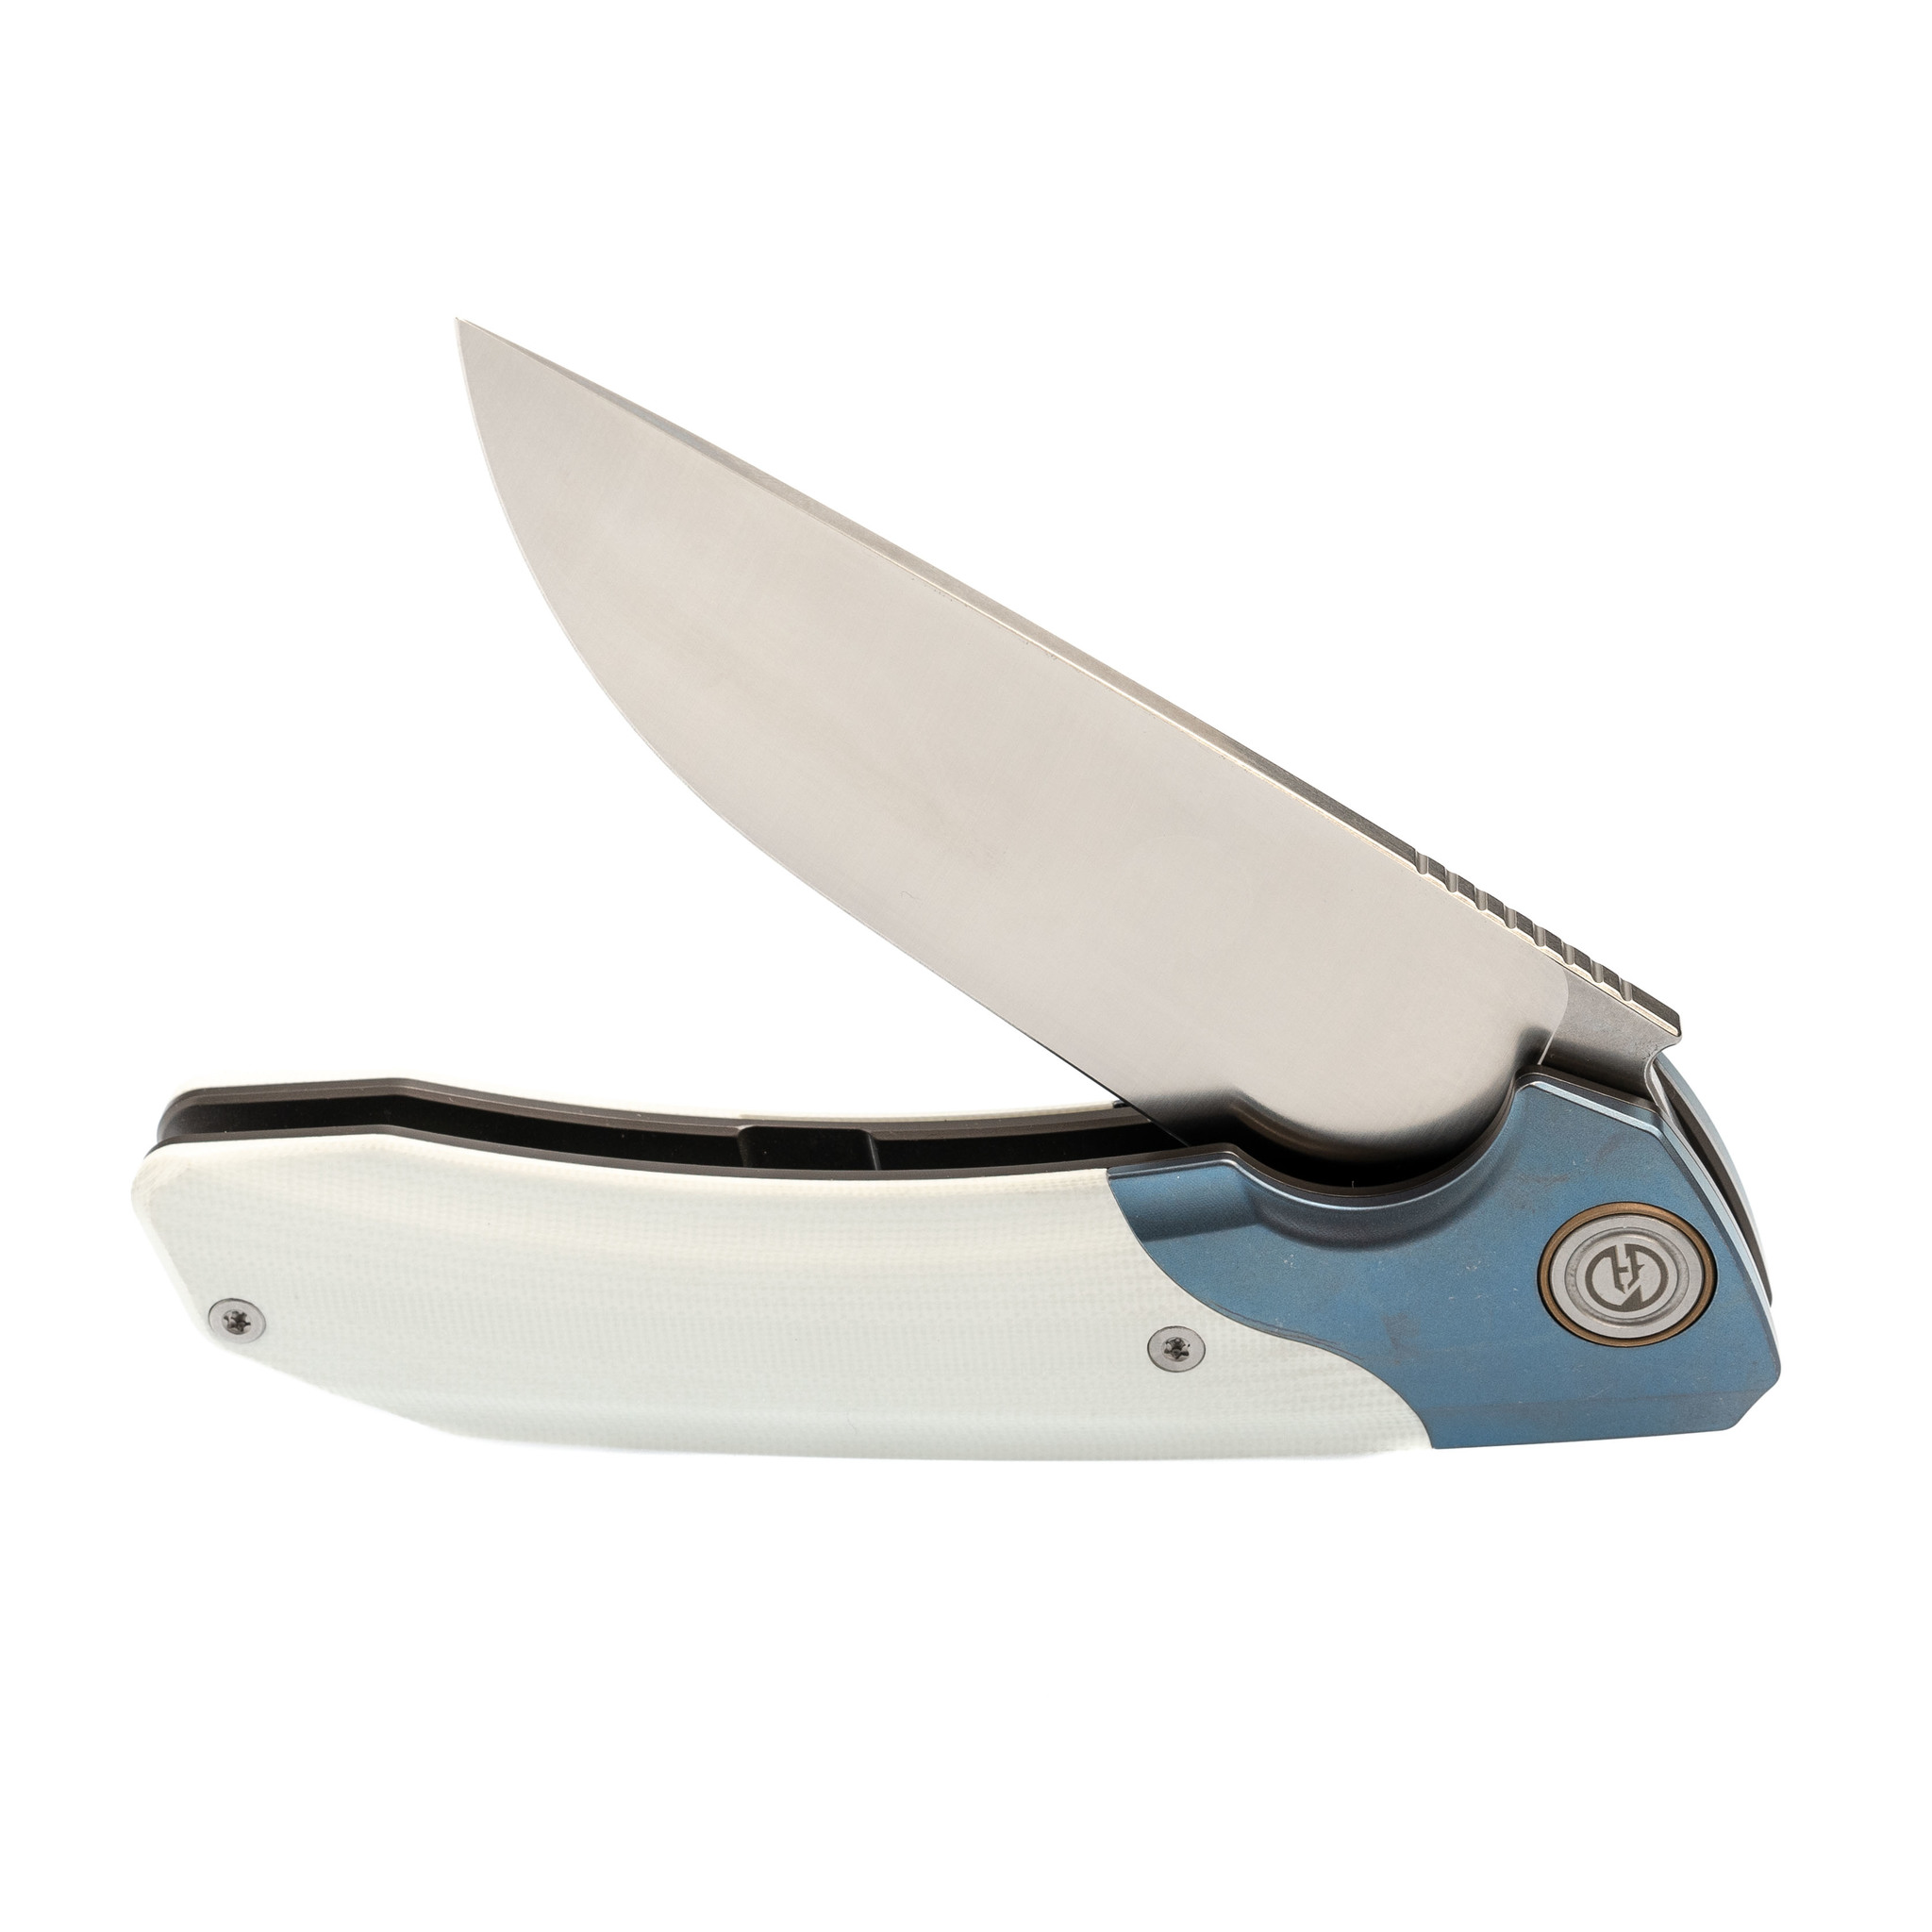 Складной нож Maxace Goliath White, сталь Bohler K110, рукоять G10 и Stainless Steel от Ножиков